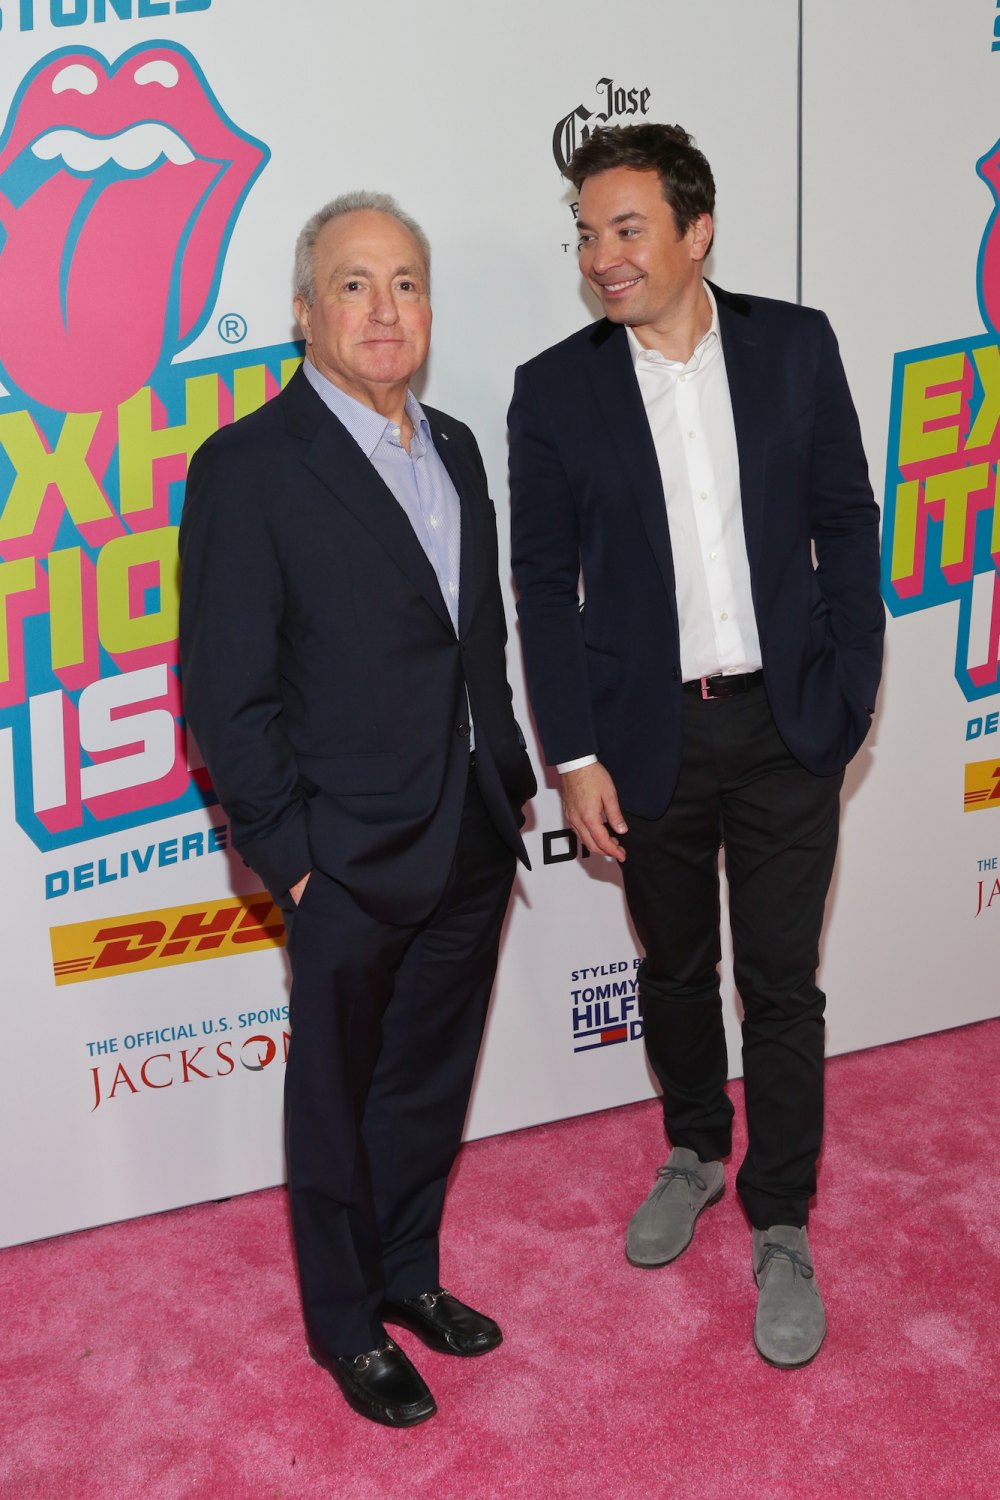 Jimmy Fallon Says Saturday Night Live Creator Lorne Michael Saved His Career at NBC